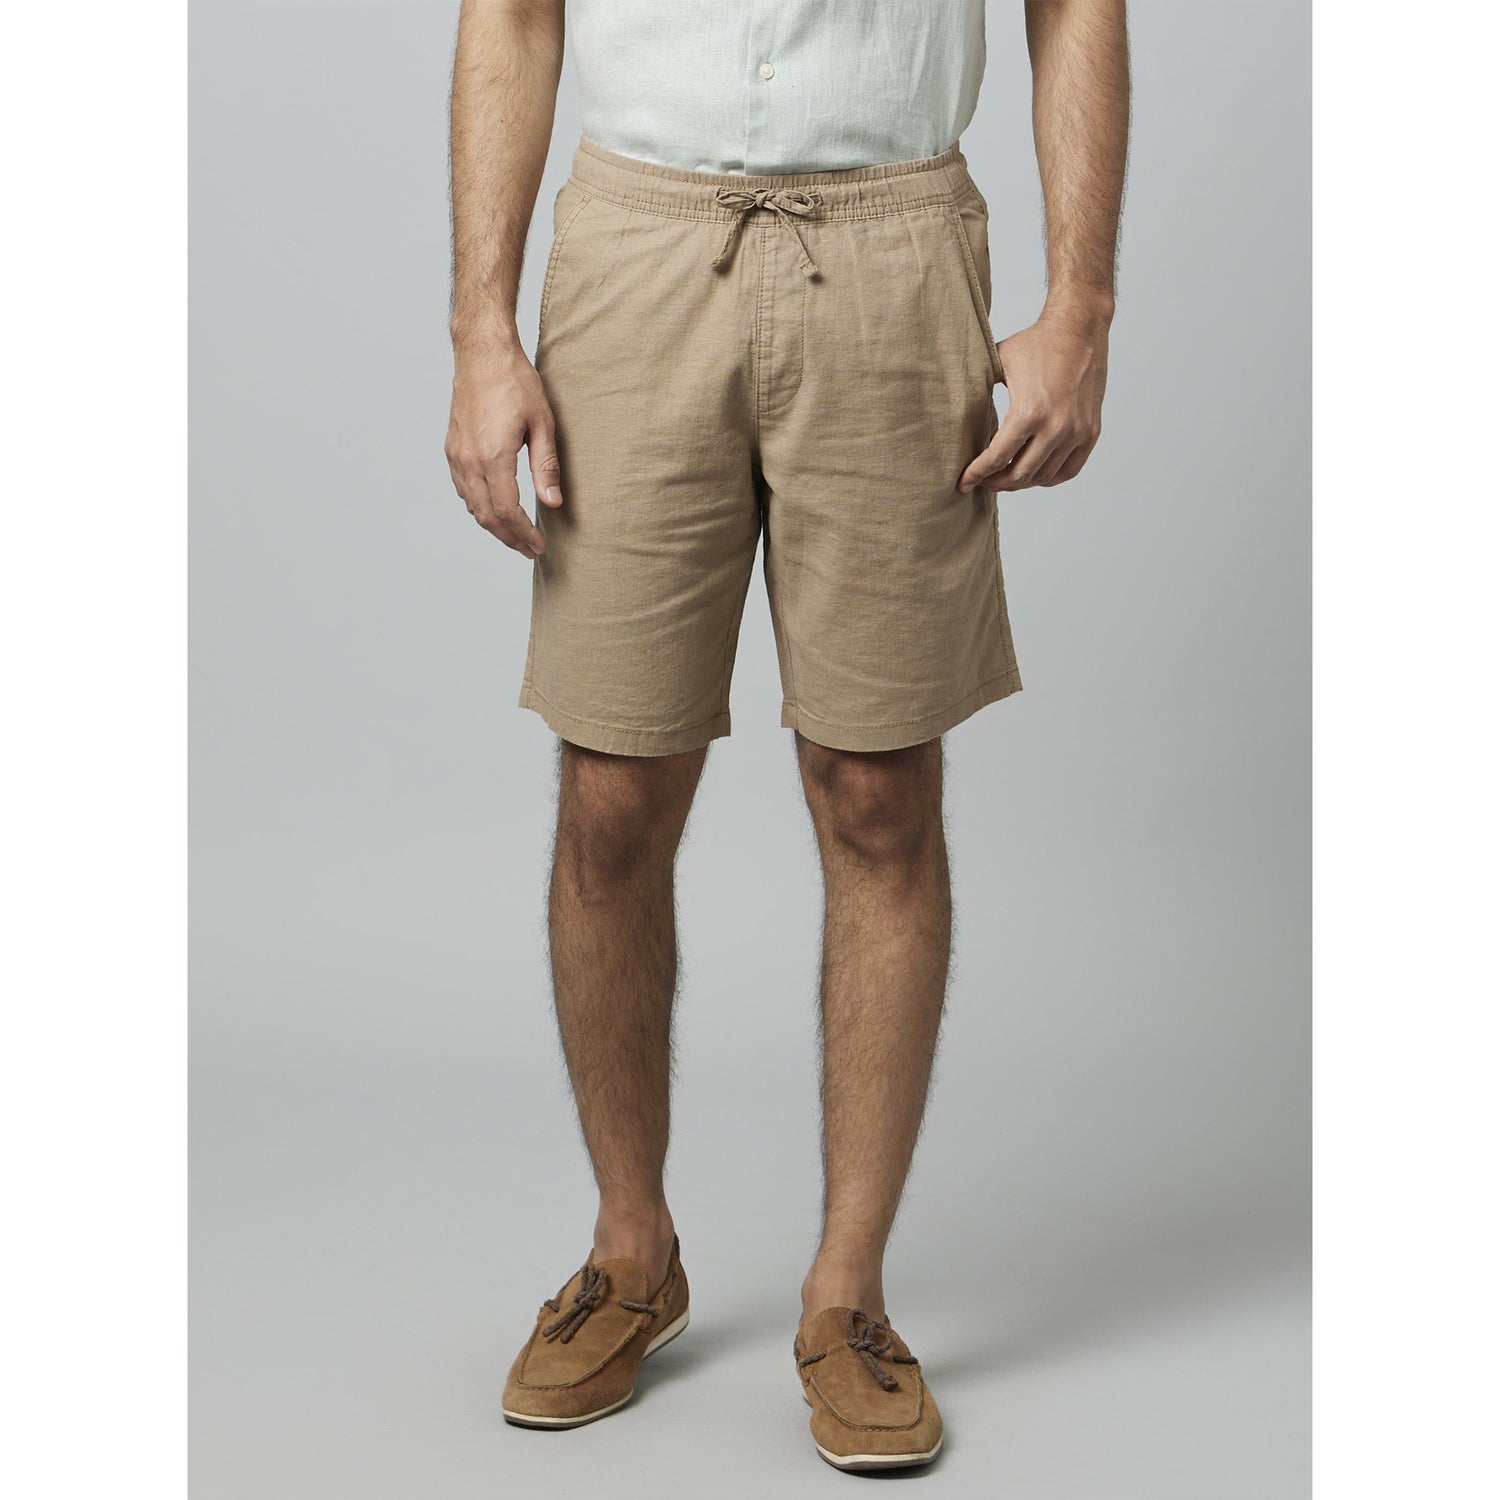 Khaki Solid Mid-Rise Cotton Shorts (DOLINCOBM)